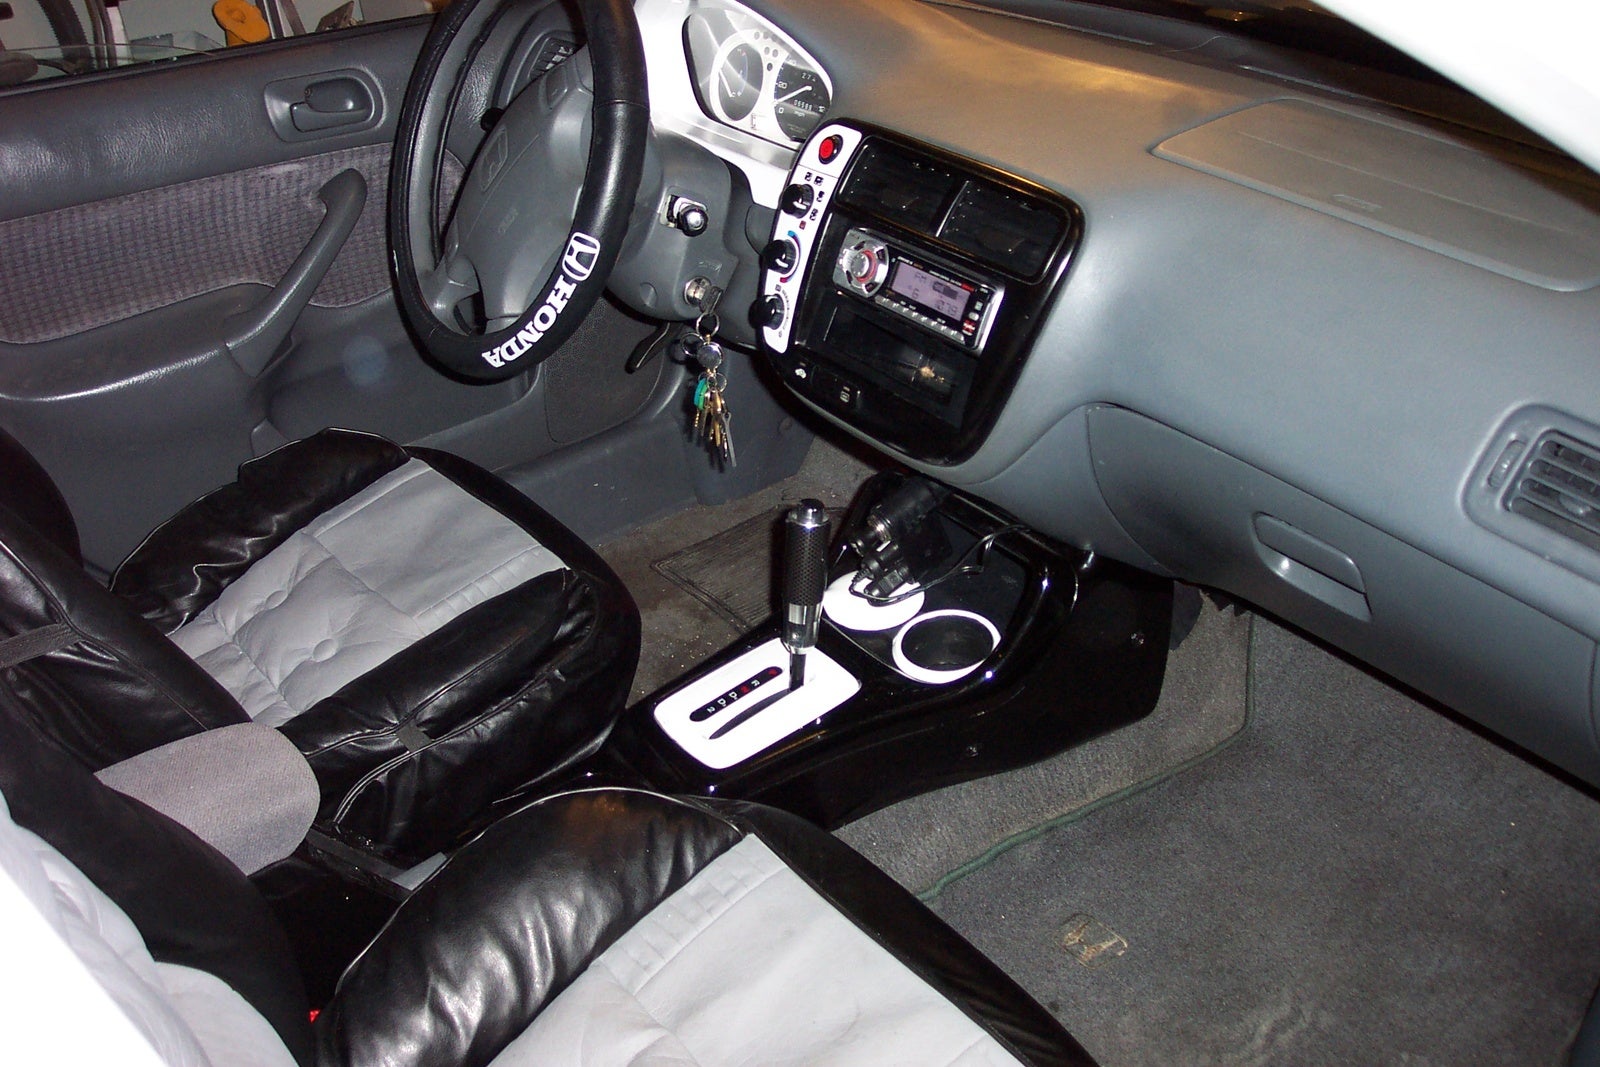 Honda Civic Hatchback 2000 Modified